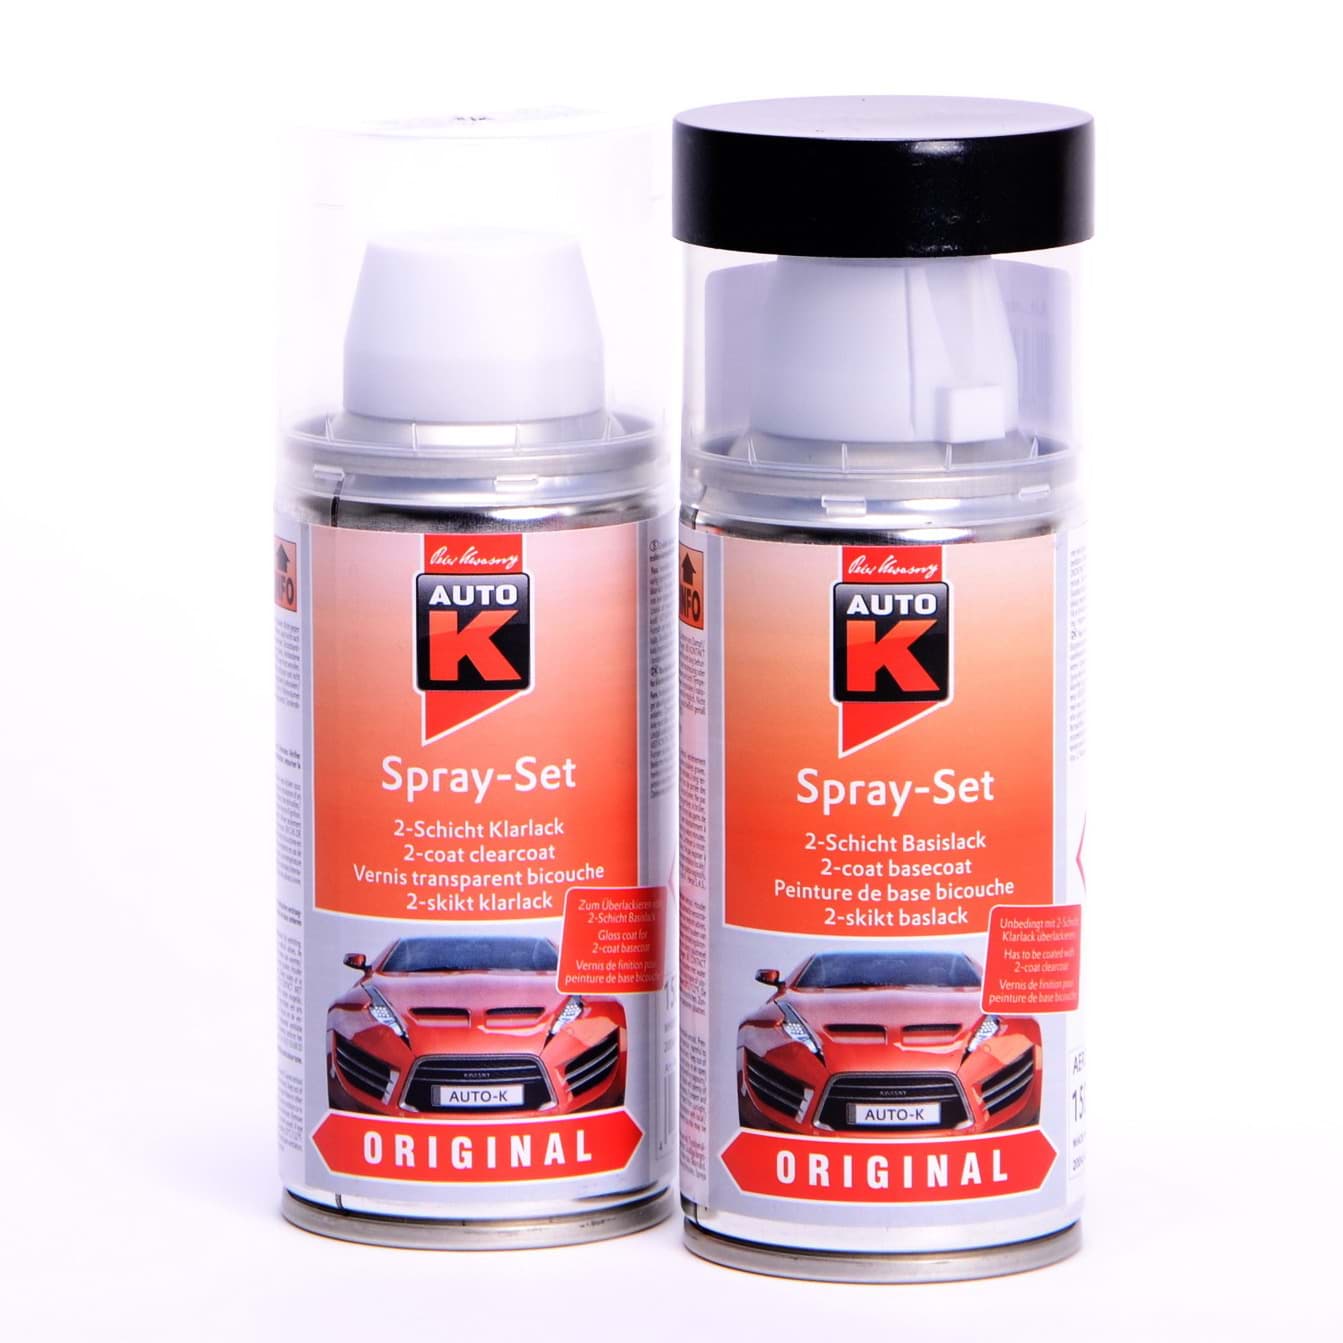 Afbeelding van Auto-K Spray-Set Autolack für Volkswagen, VW, Audi LB5N Indigoblau perl met 20868